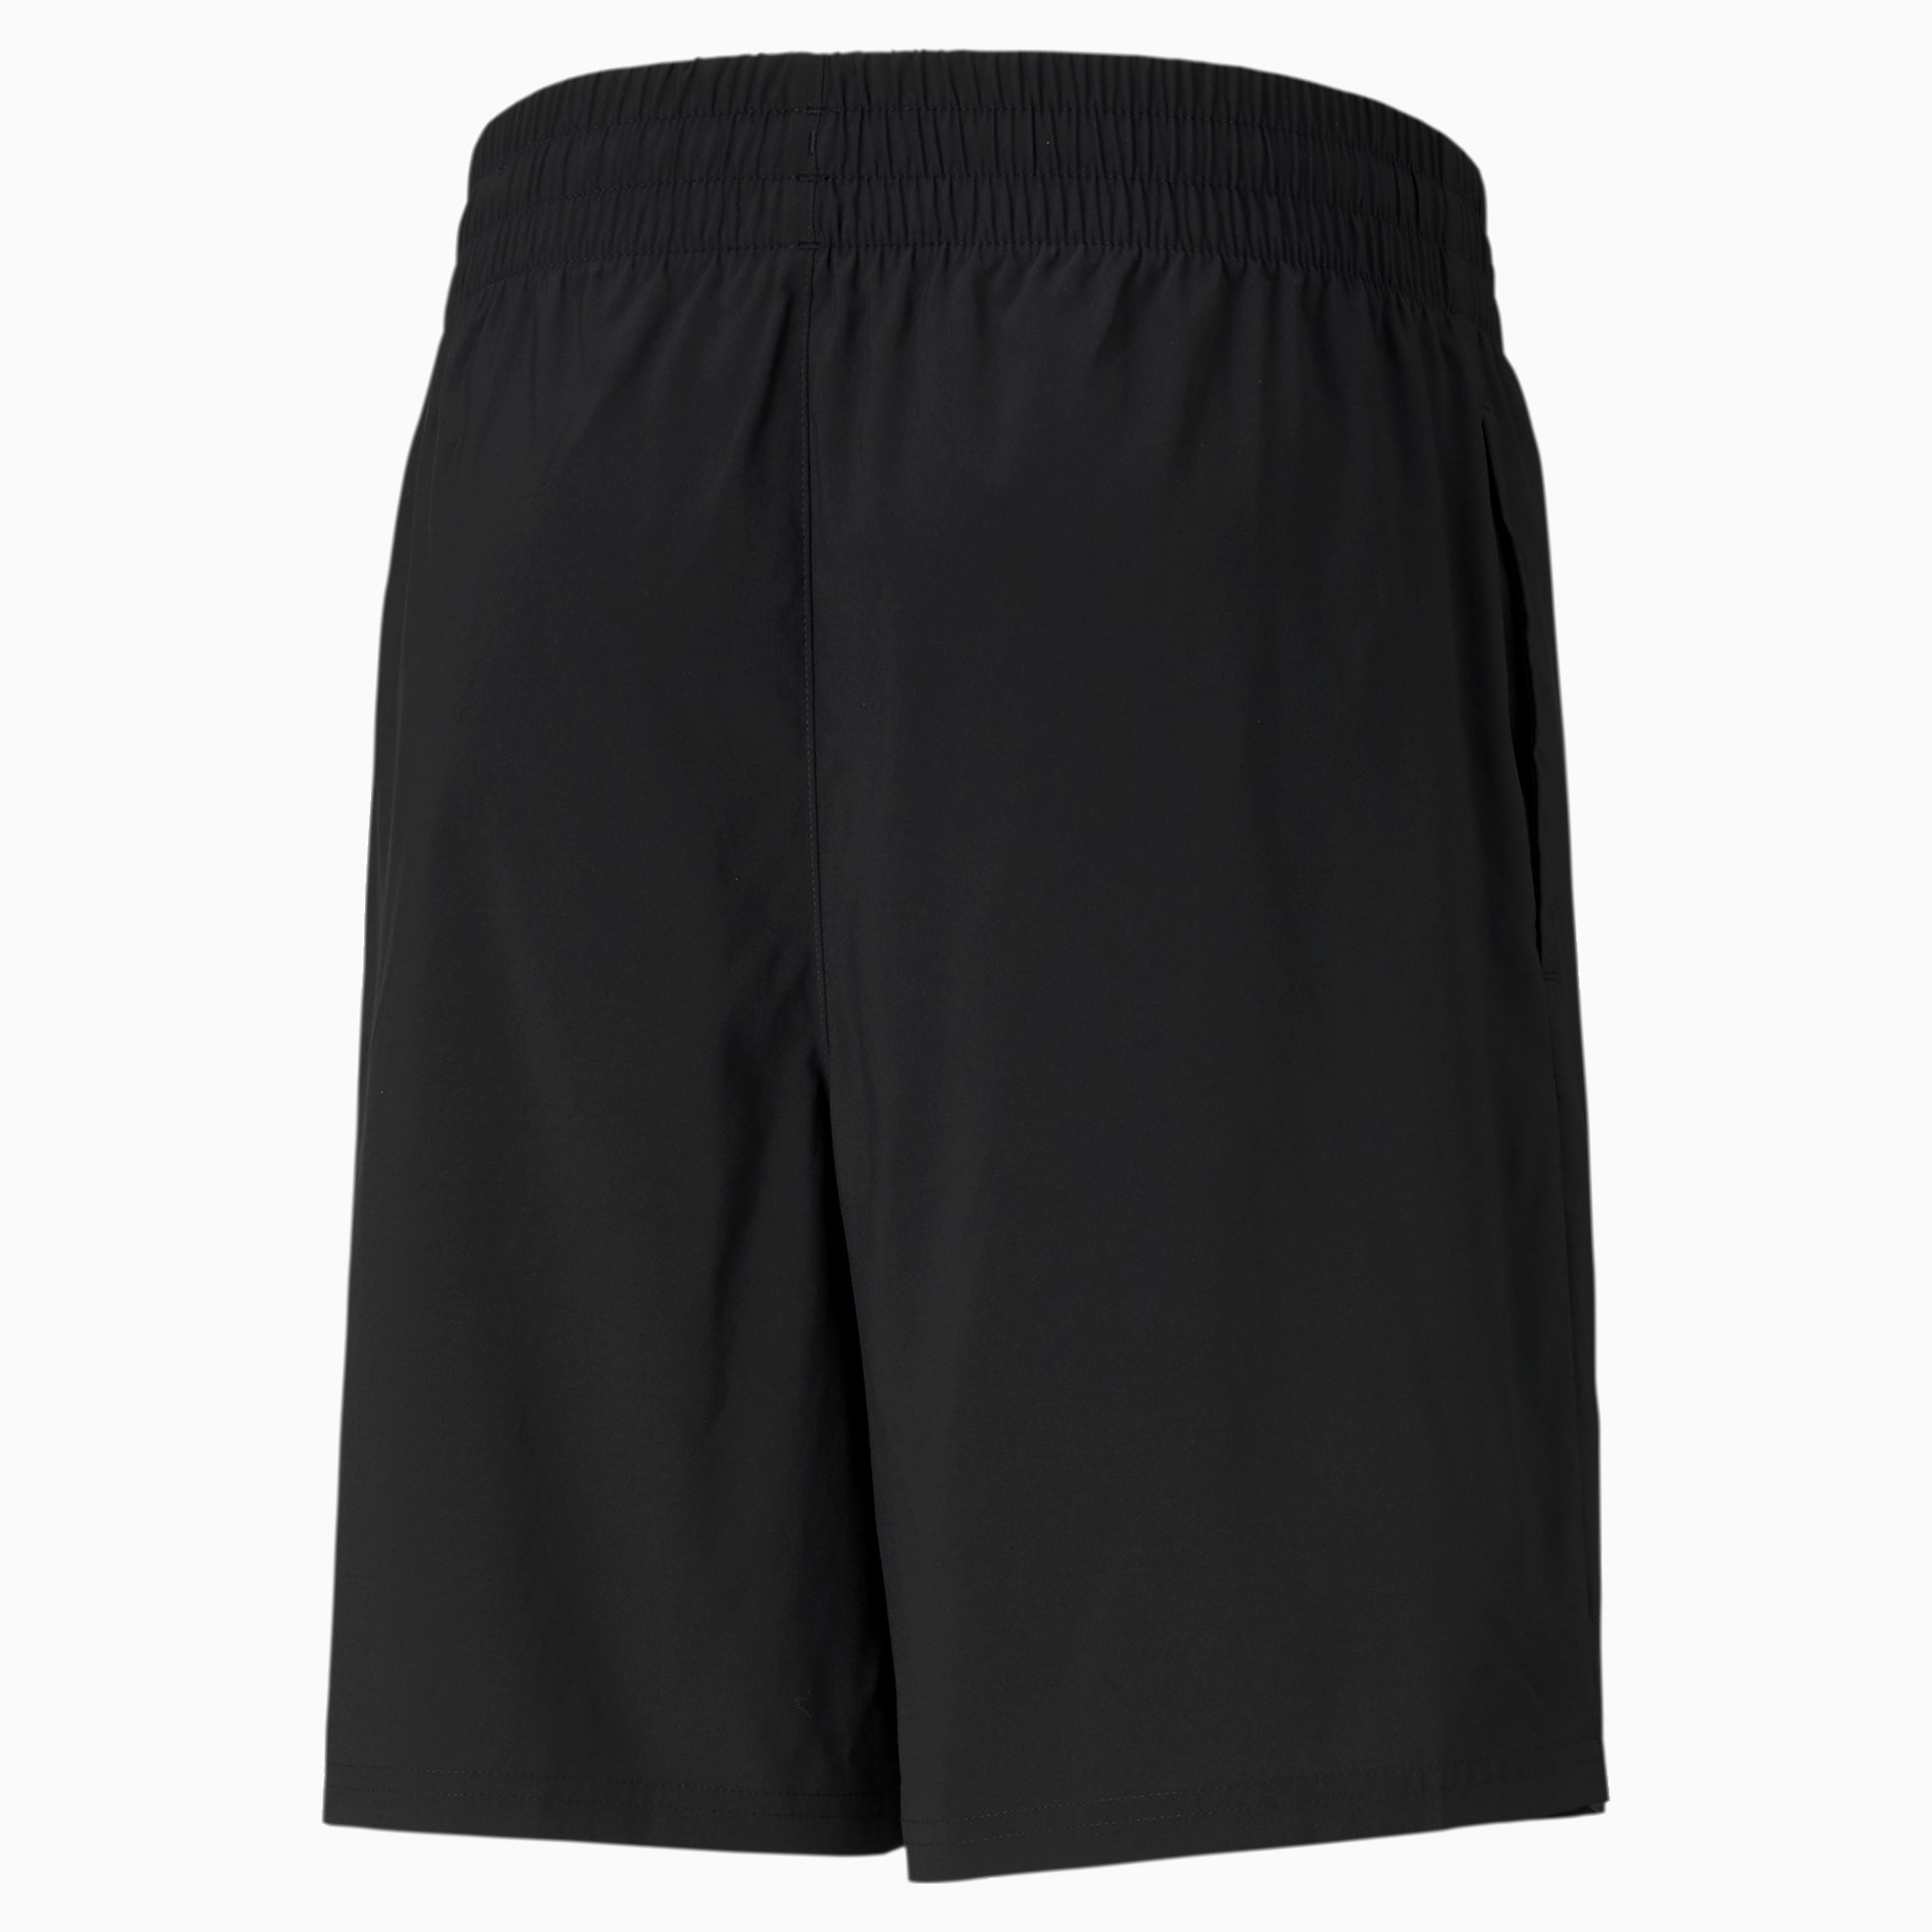 PUMA Favourite Blaster 7 Men's Training Shorts, Black